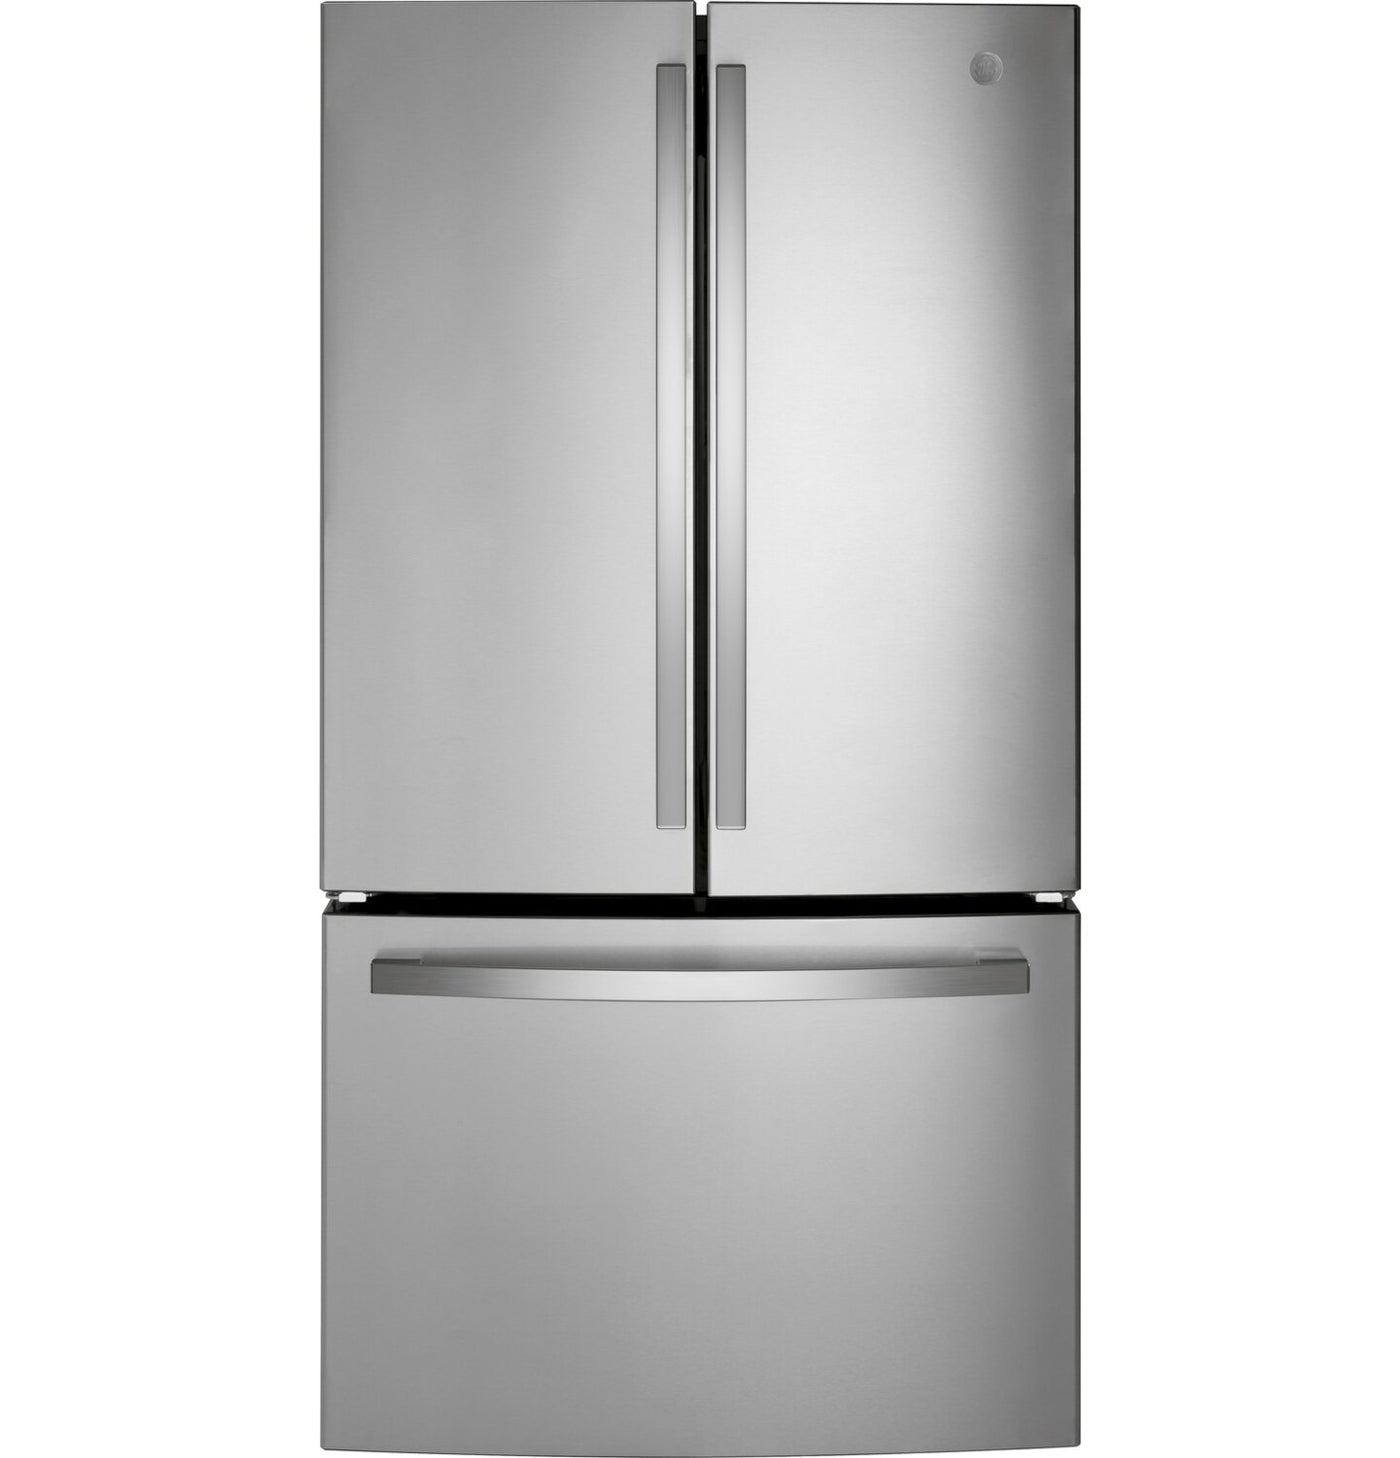 16++ Ge french door refrigerator ice maker leaking water information